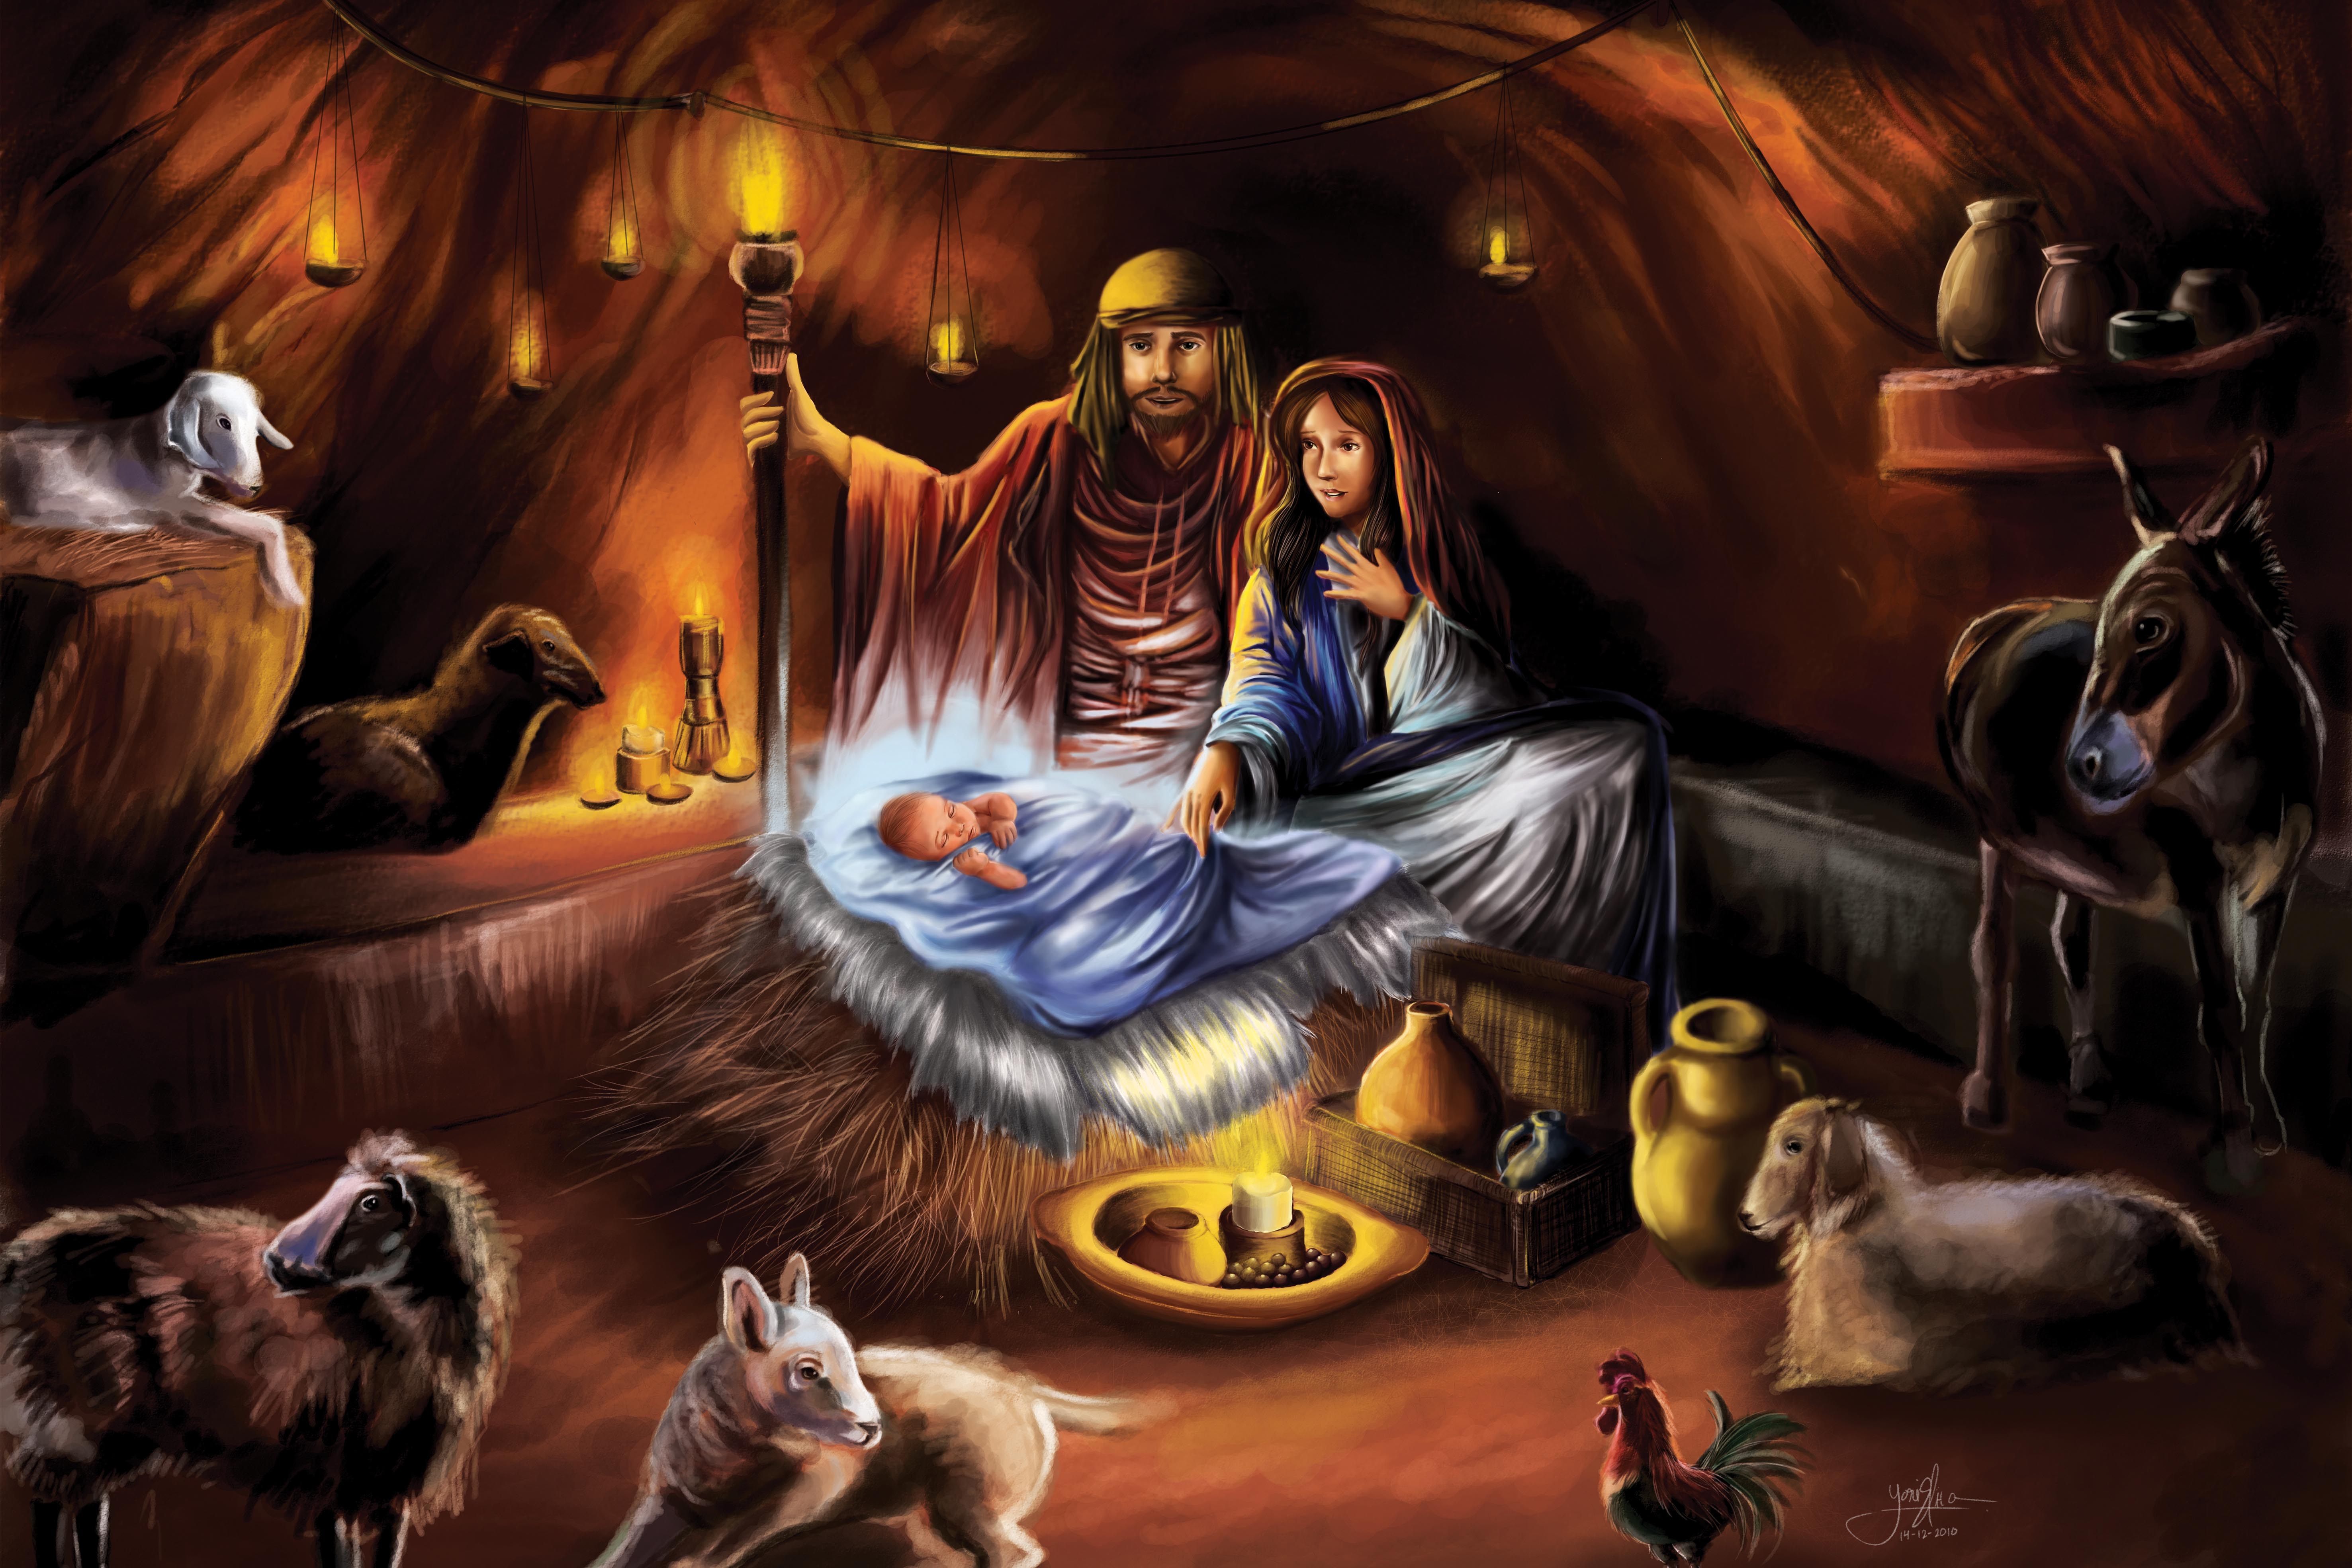 Birth of Christ Background. Following Christ Wallpaper, Incredible Christ Wallpaper and Birth of Christ Wallpaper